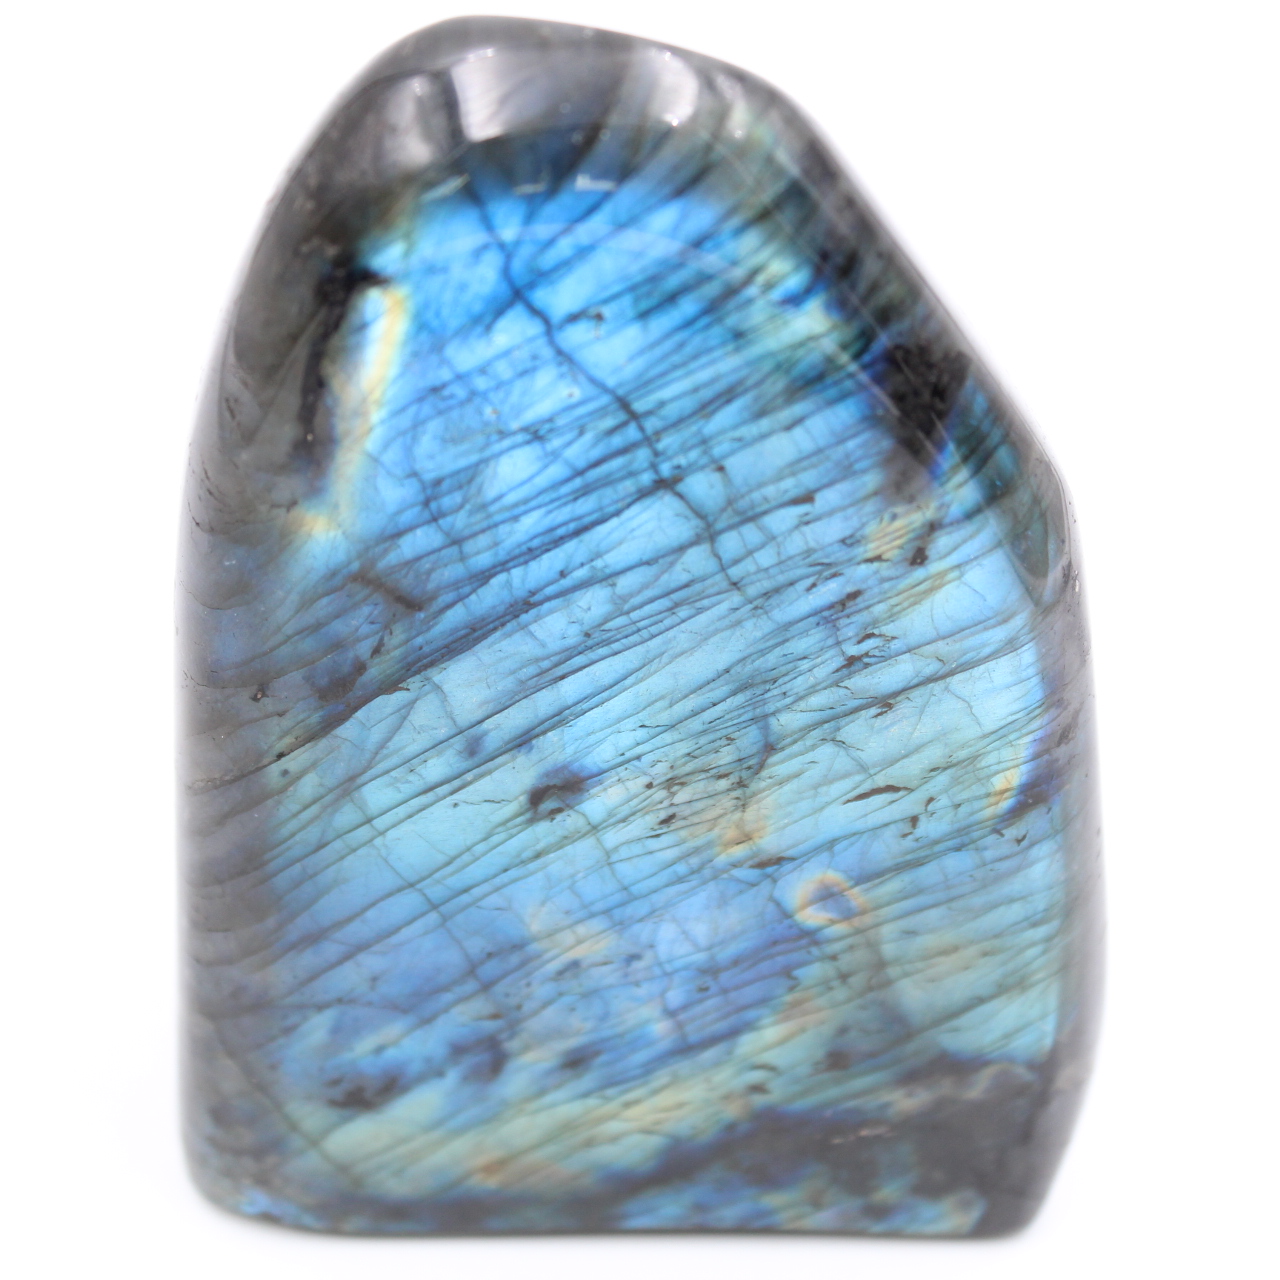 Bloco de labradorita azul, pedra ornamental